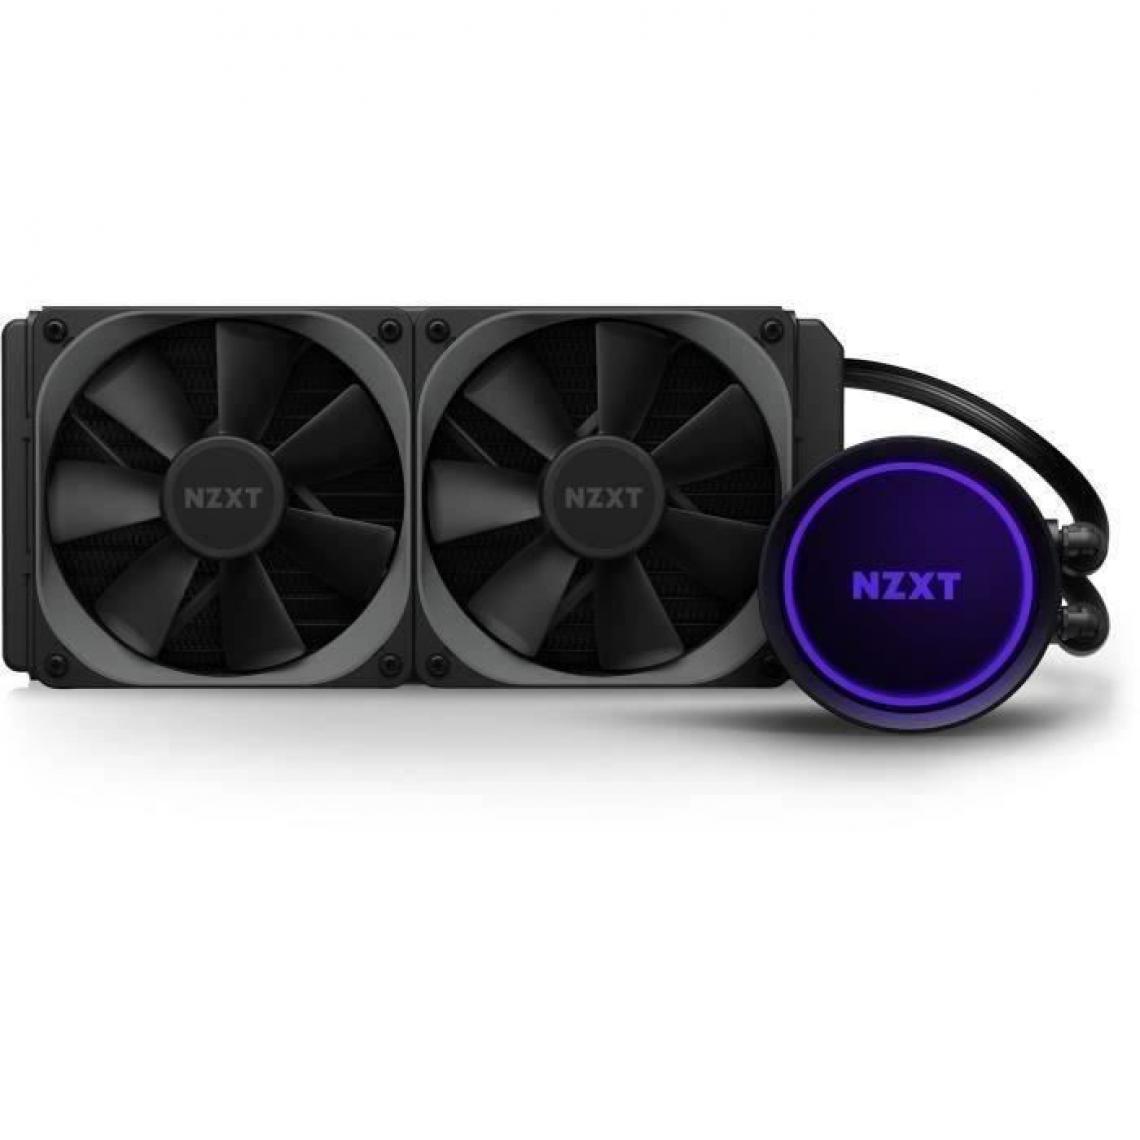 Nzxt - NZXT - radiateur et ventilateur Kraken X53 RGB - Kit watercooling